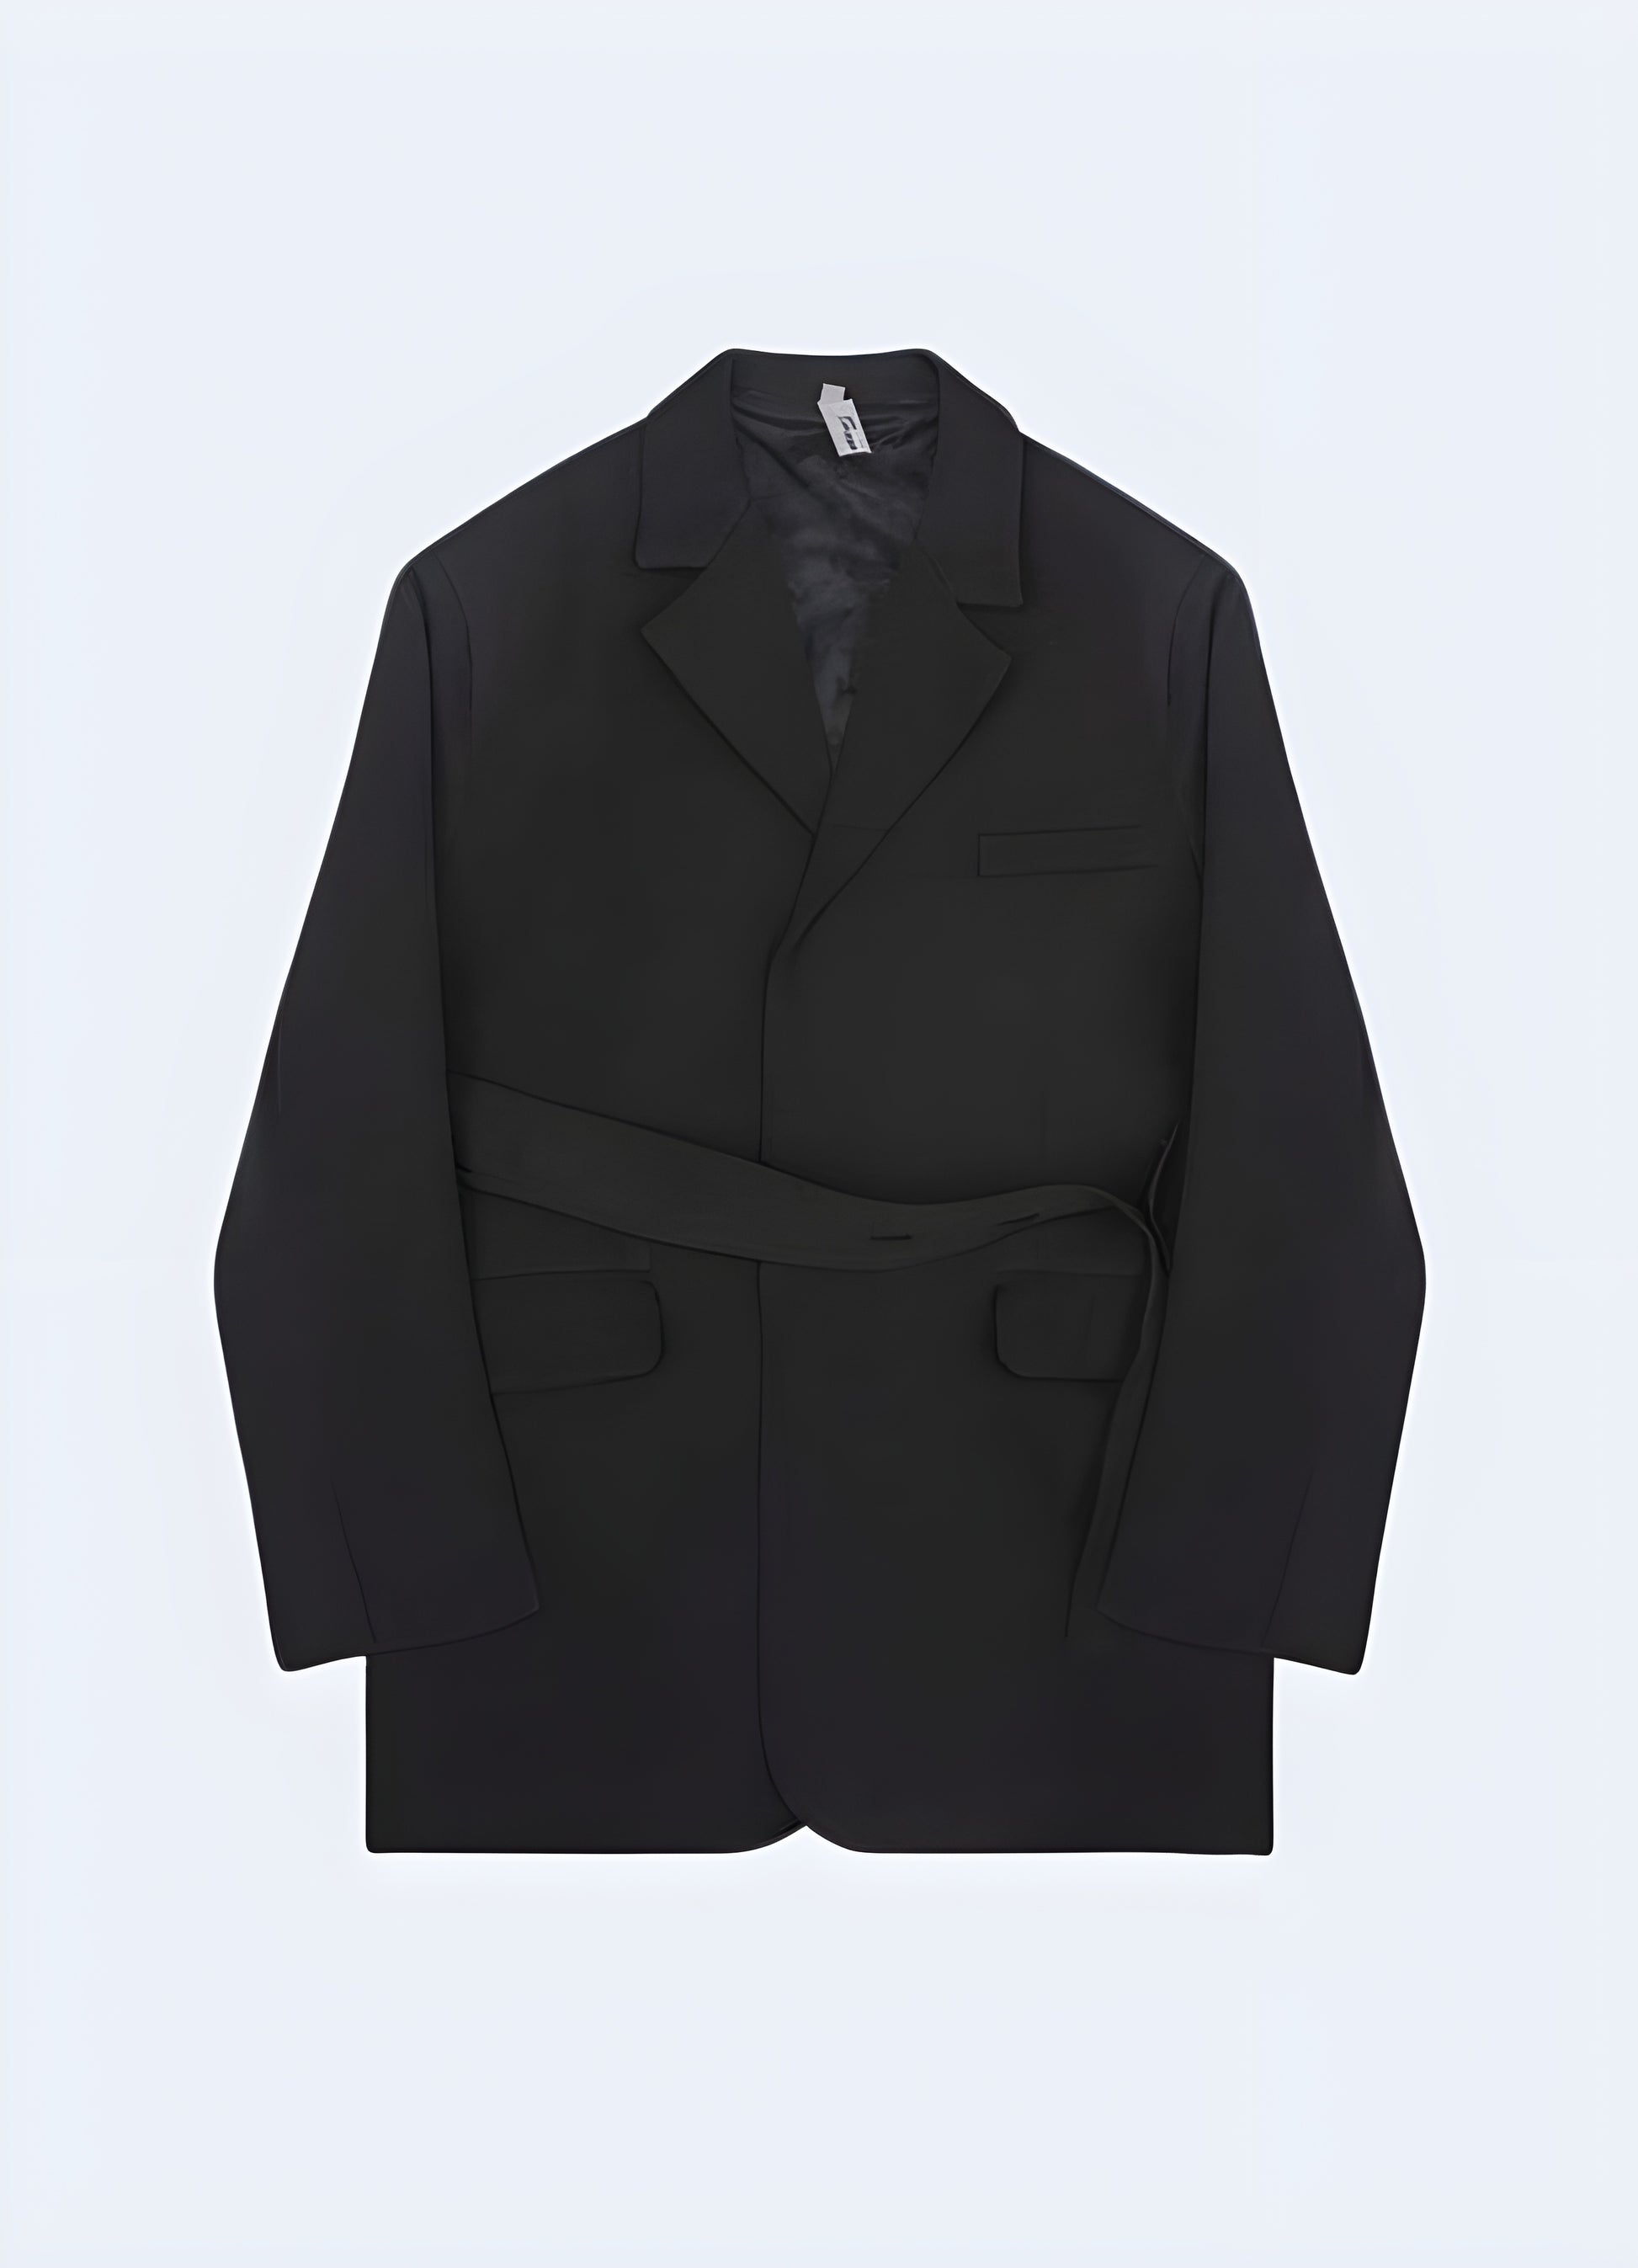 Sleek black blazer style jacket with notched lapels.